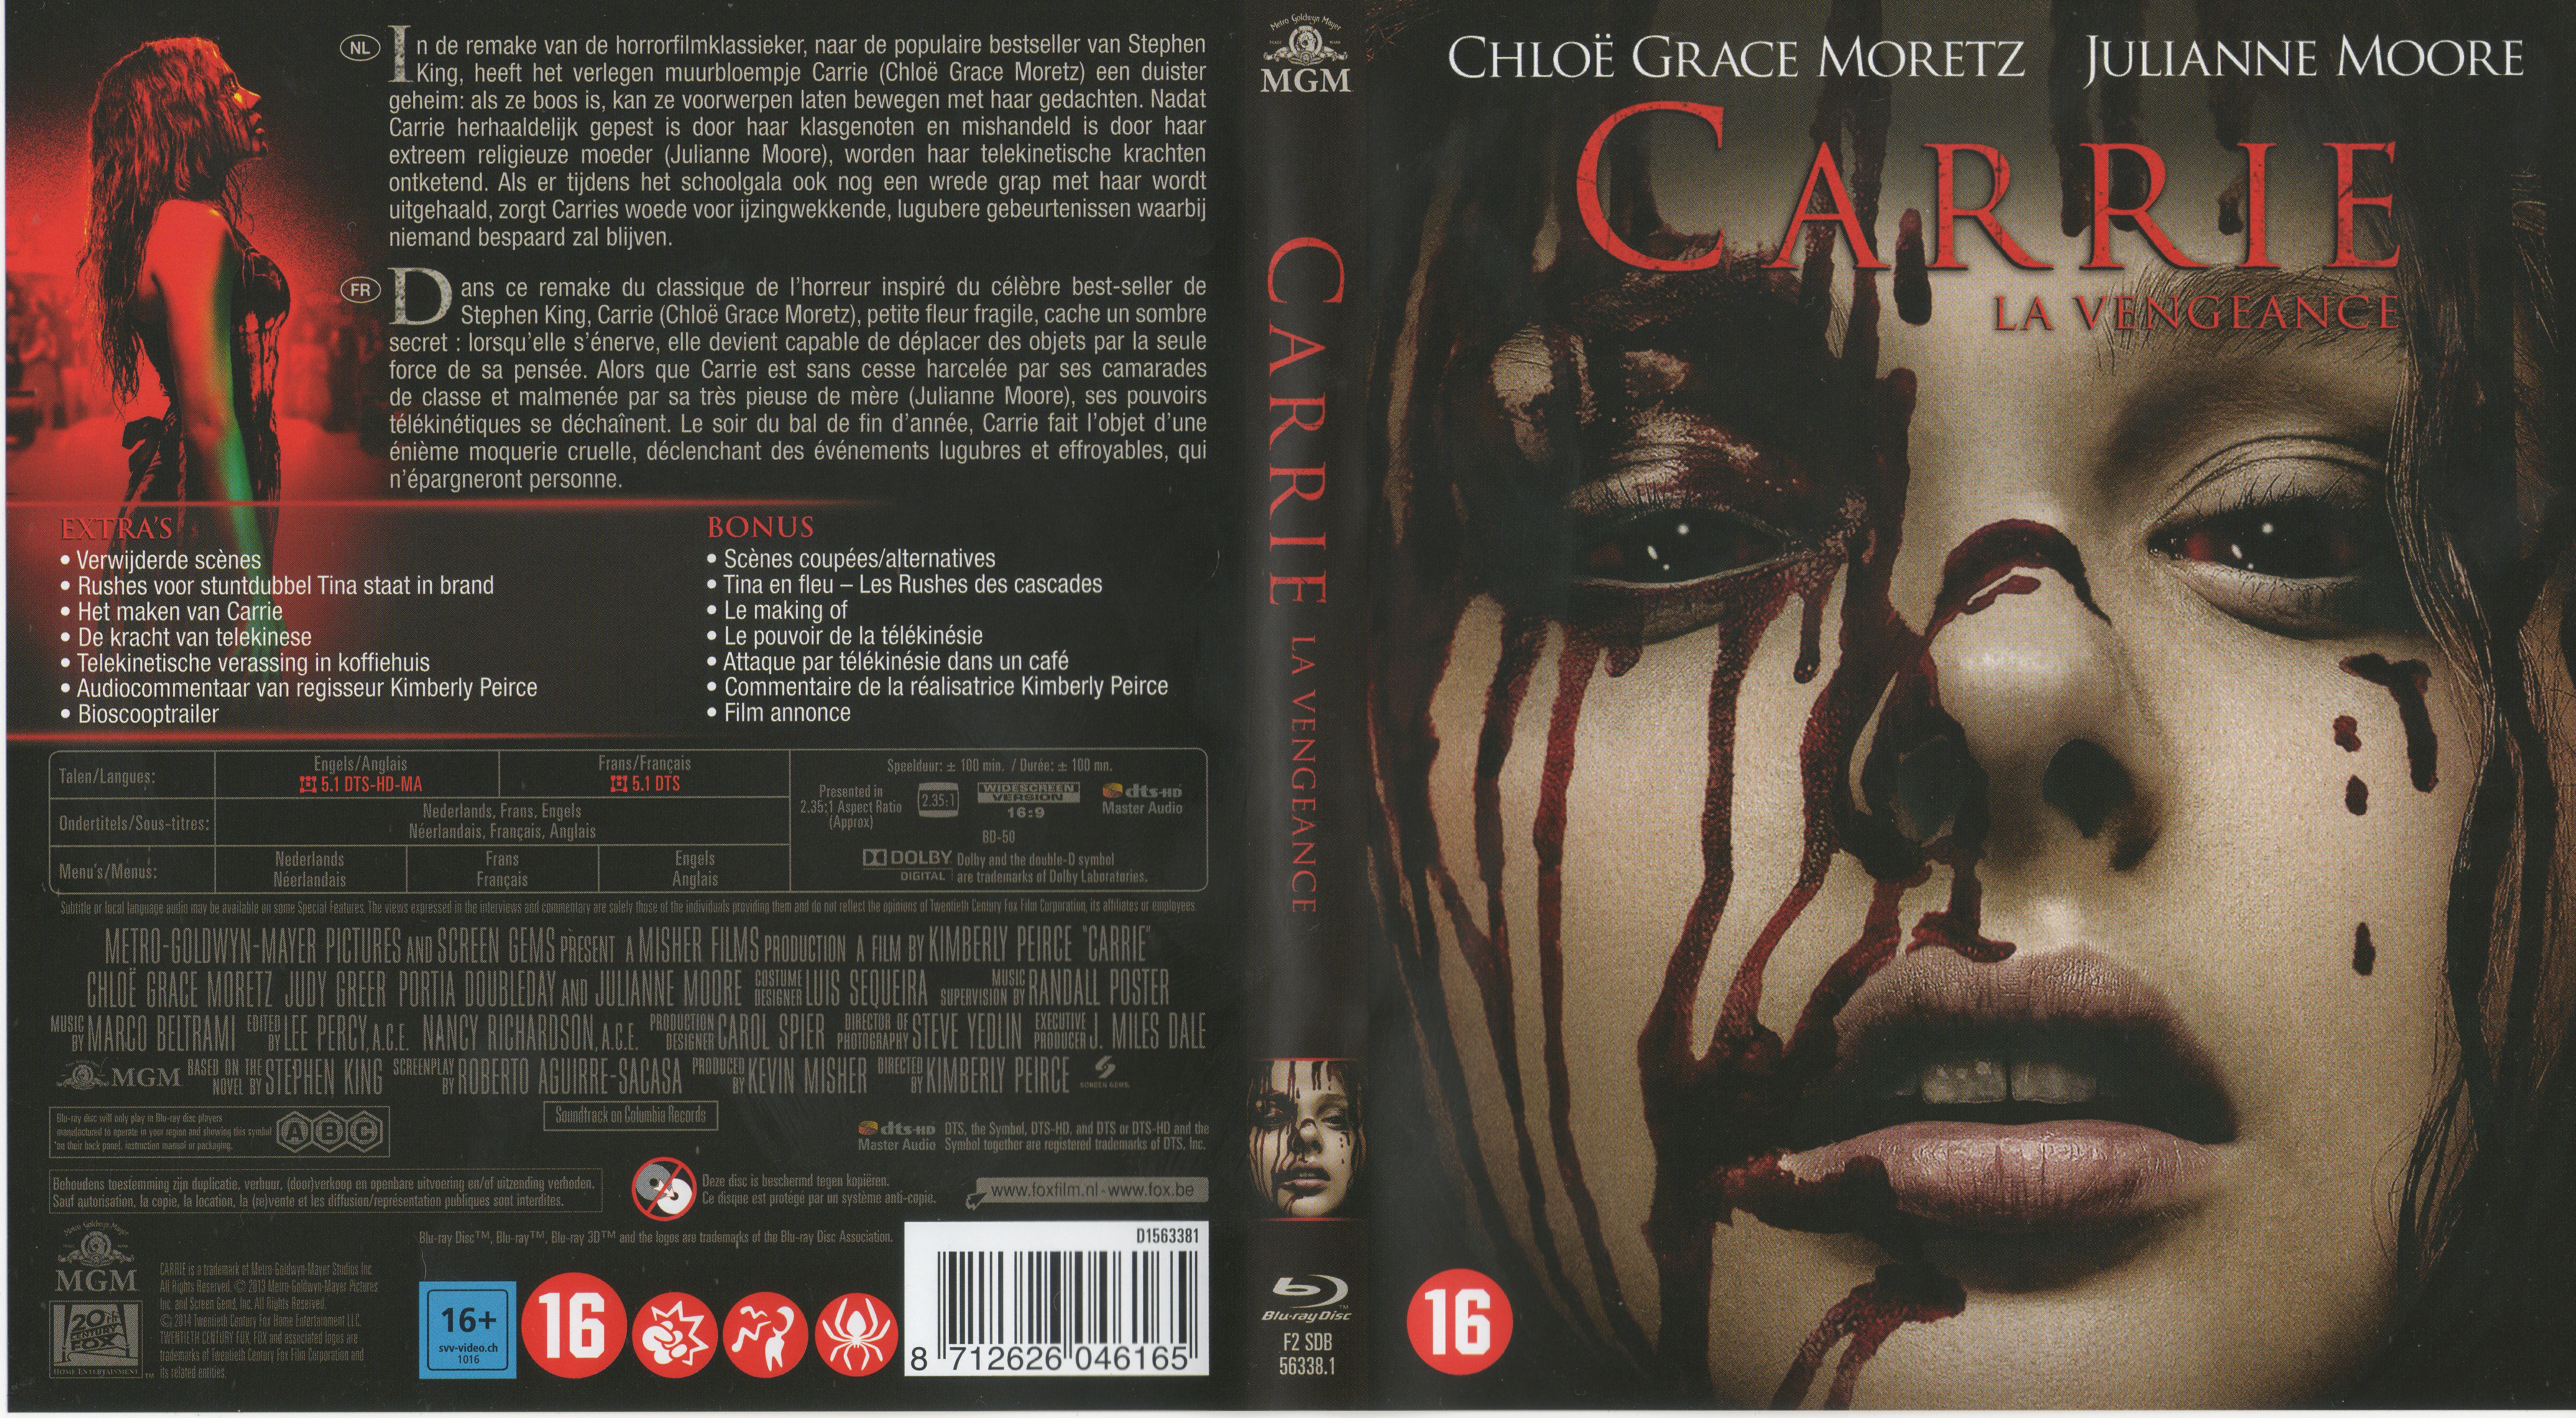 Jaquette DVD Carrie, la vengeance (BLU-RAY)